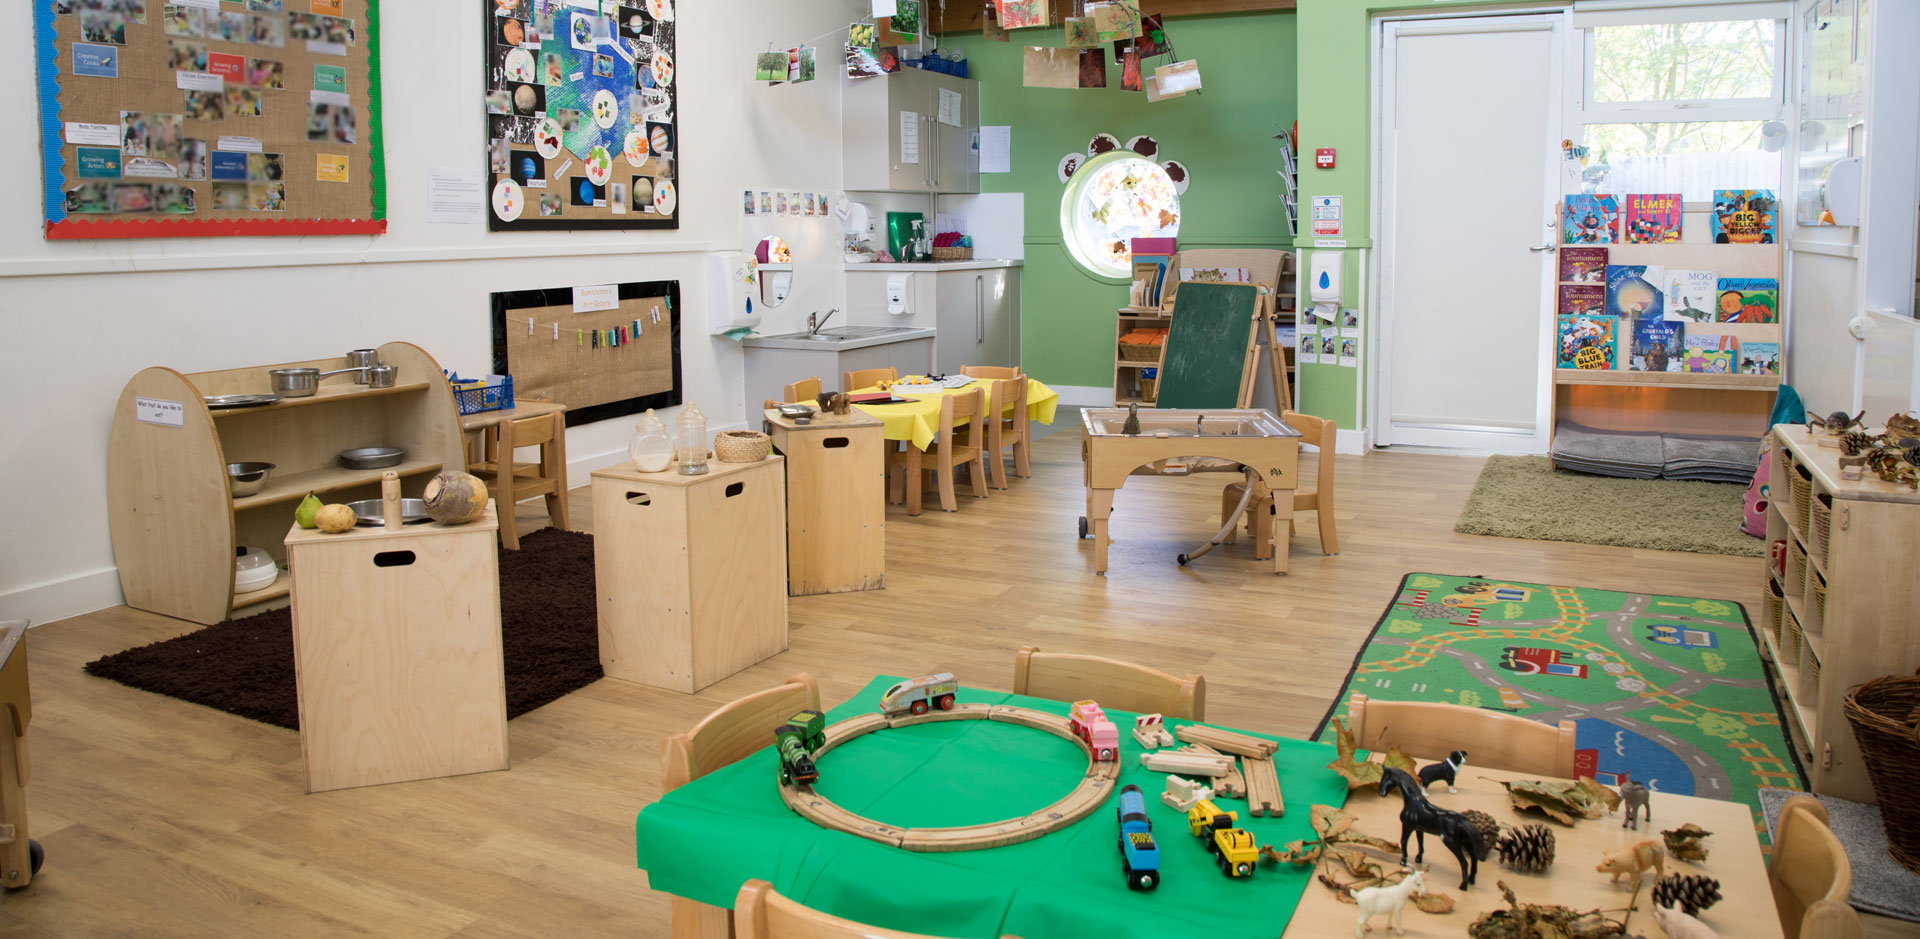 Milton Park Day Nursery and Preschool